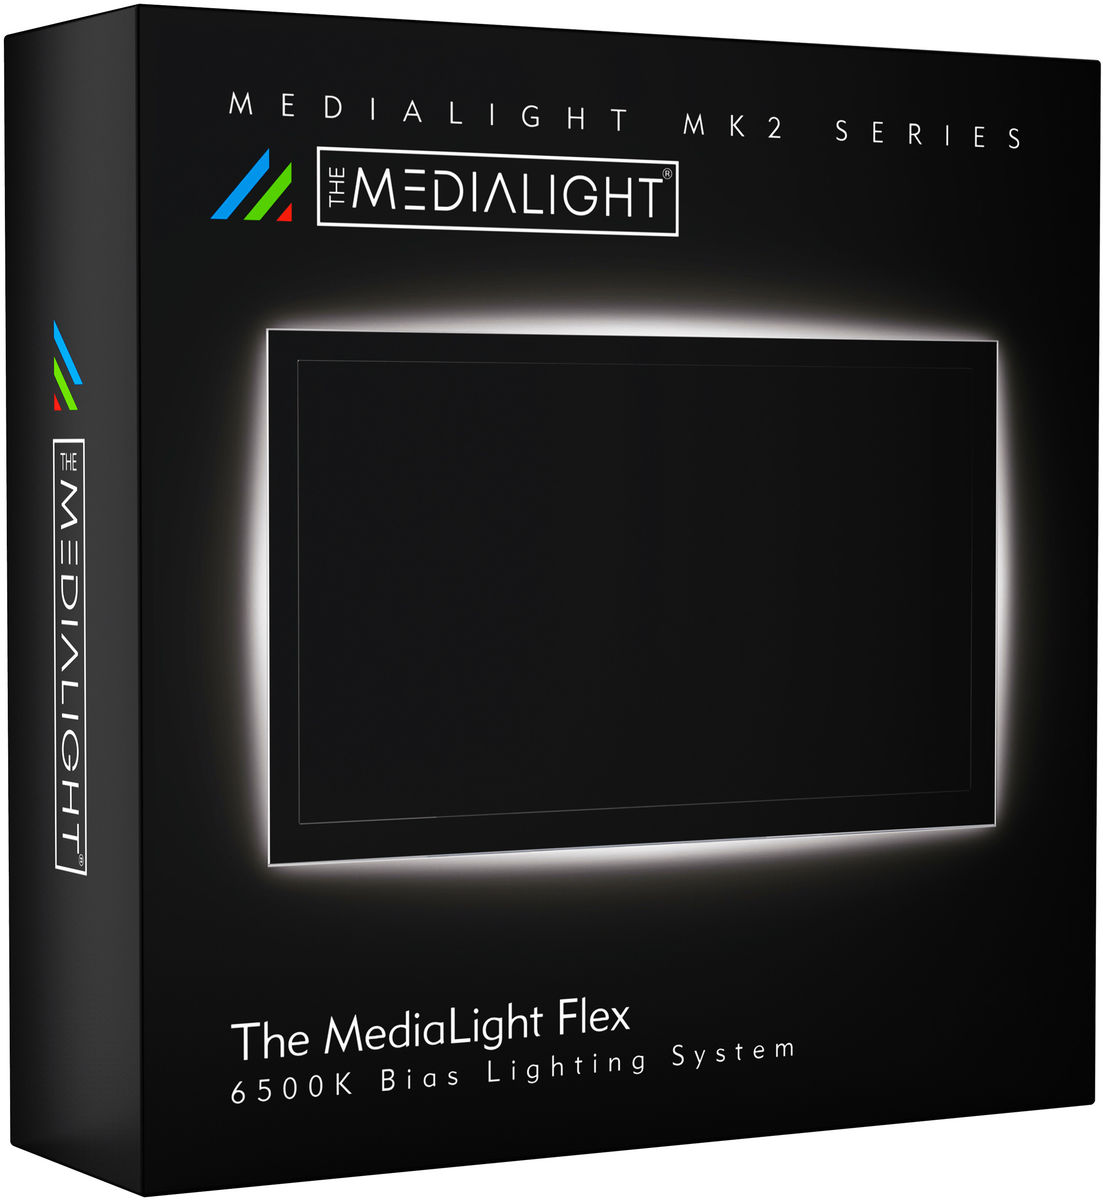 Accessoires TV Bias Lighting Medialight MK2 Flex (4 m)